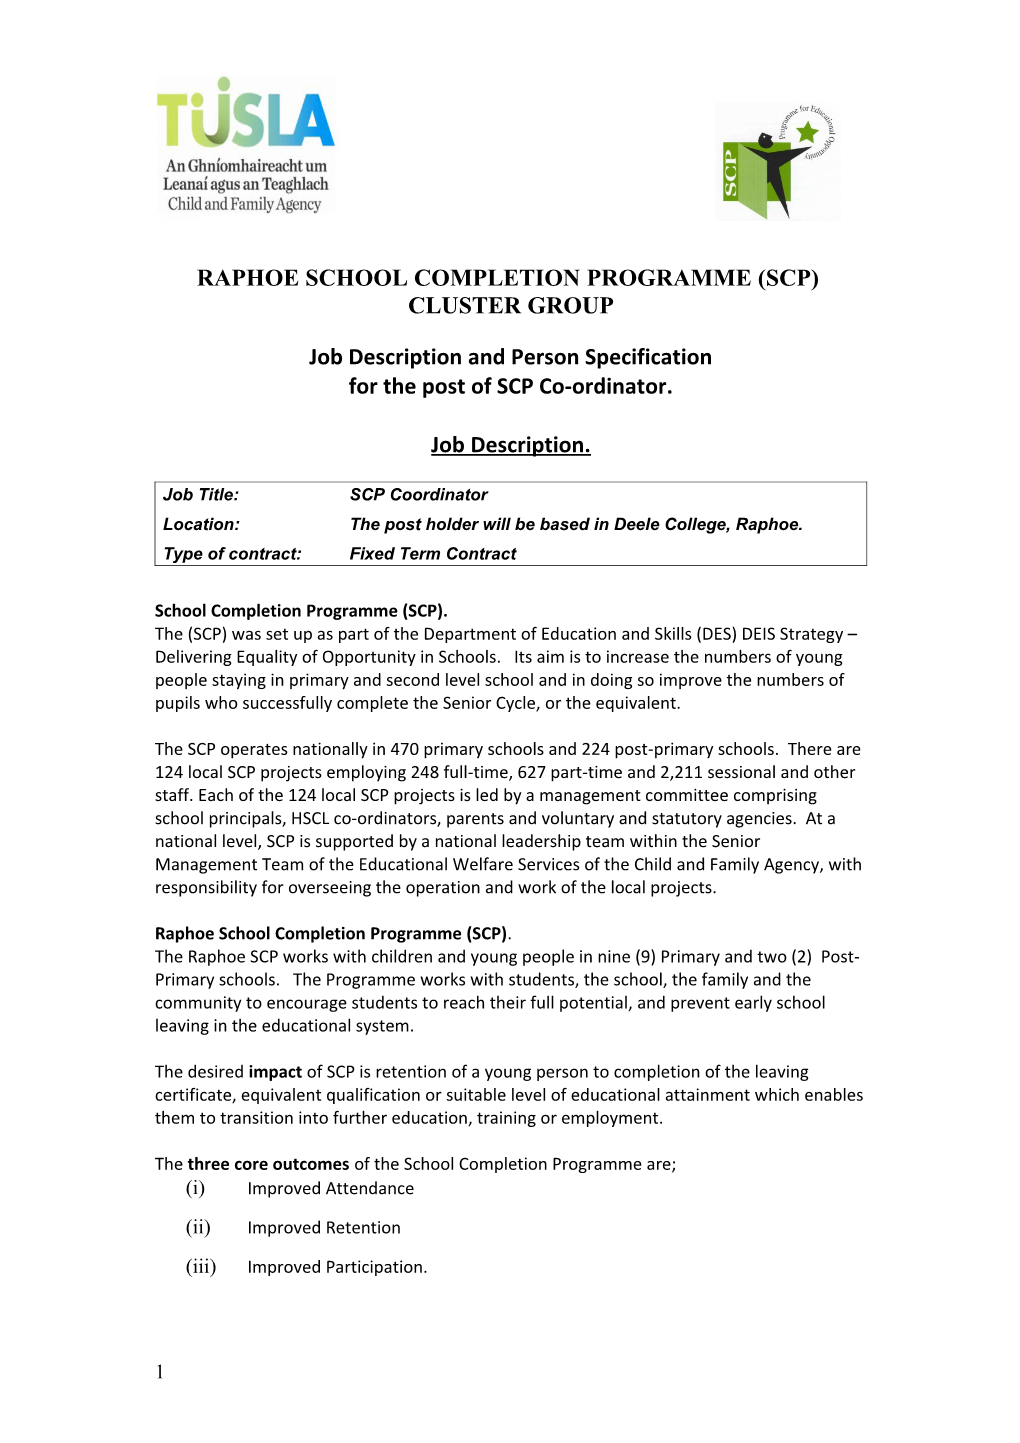 Raphoe School Completion Programme (Scp)